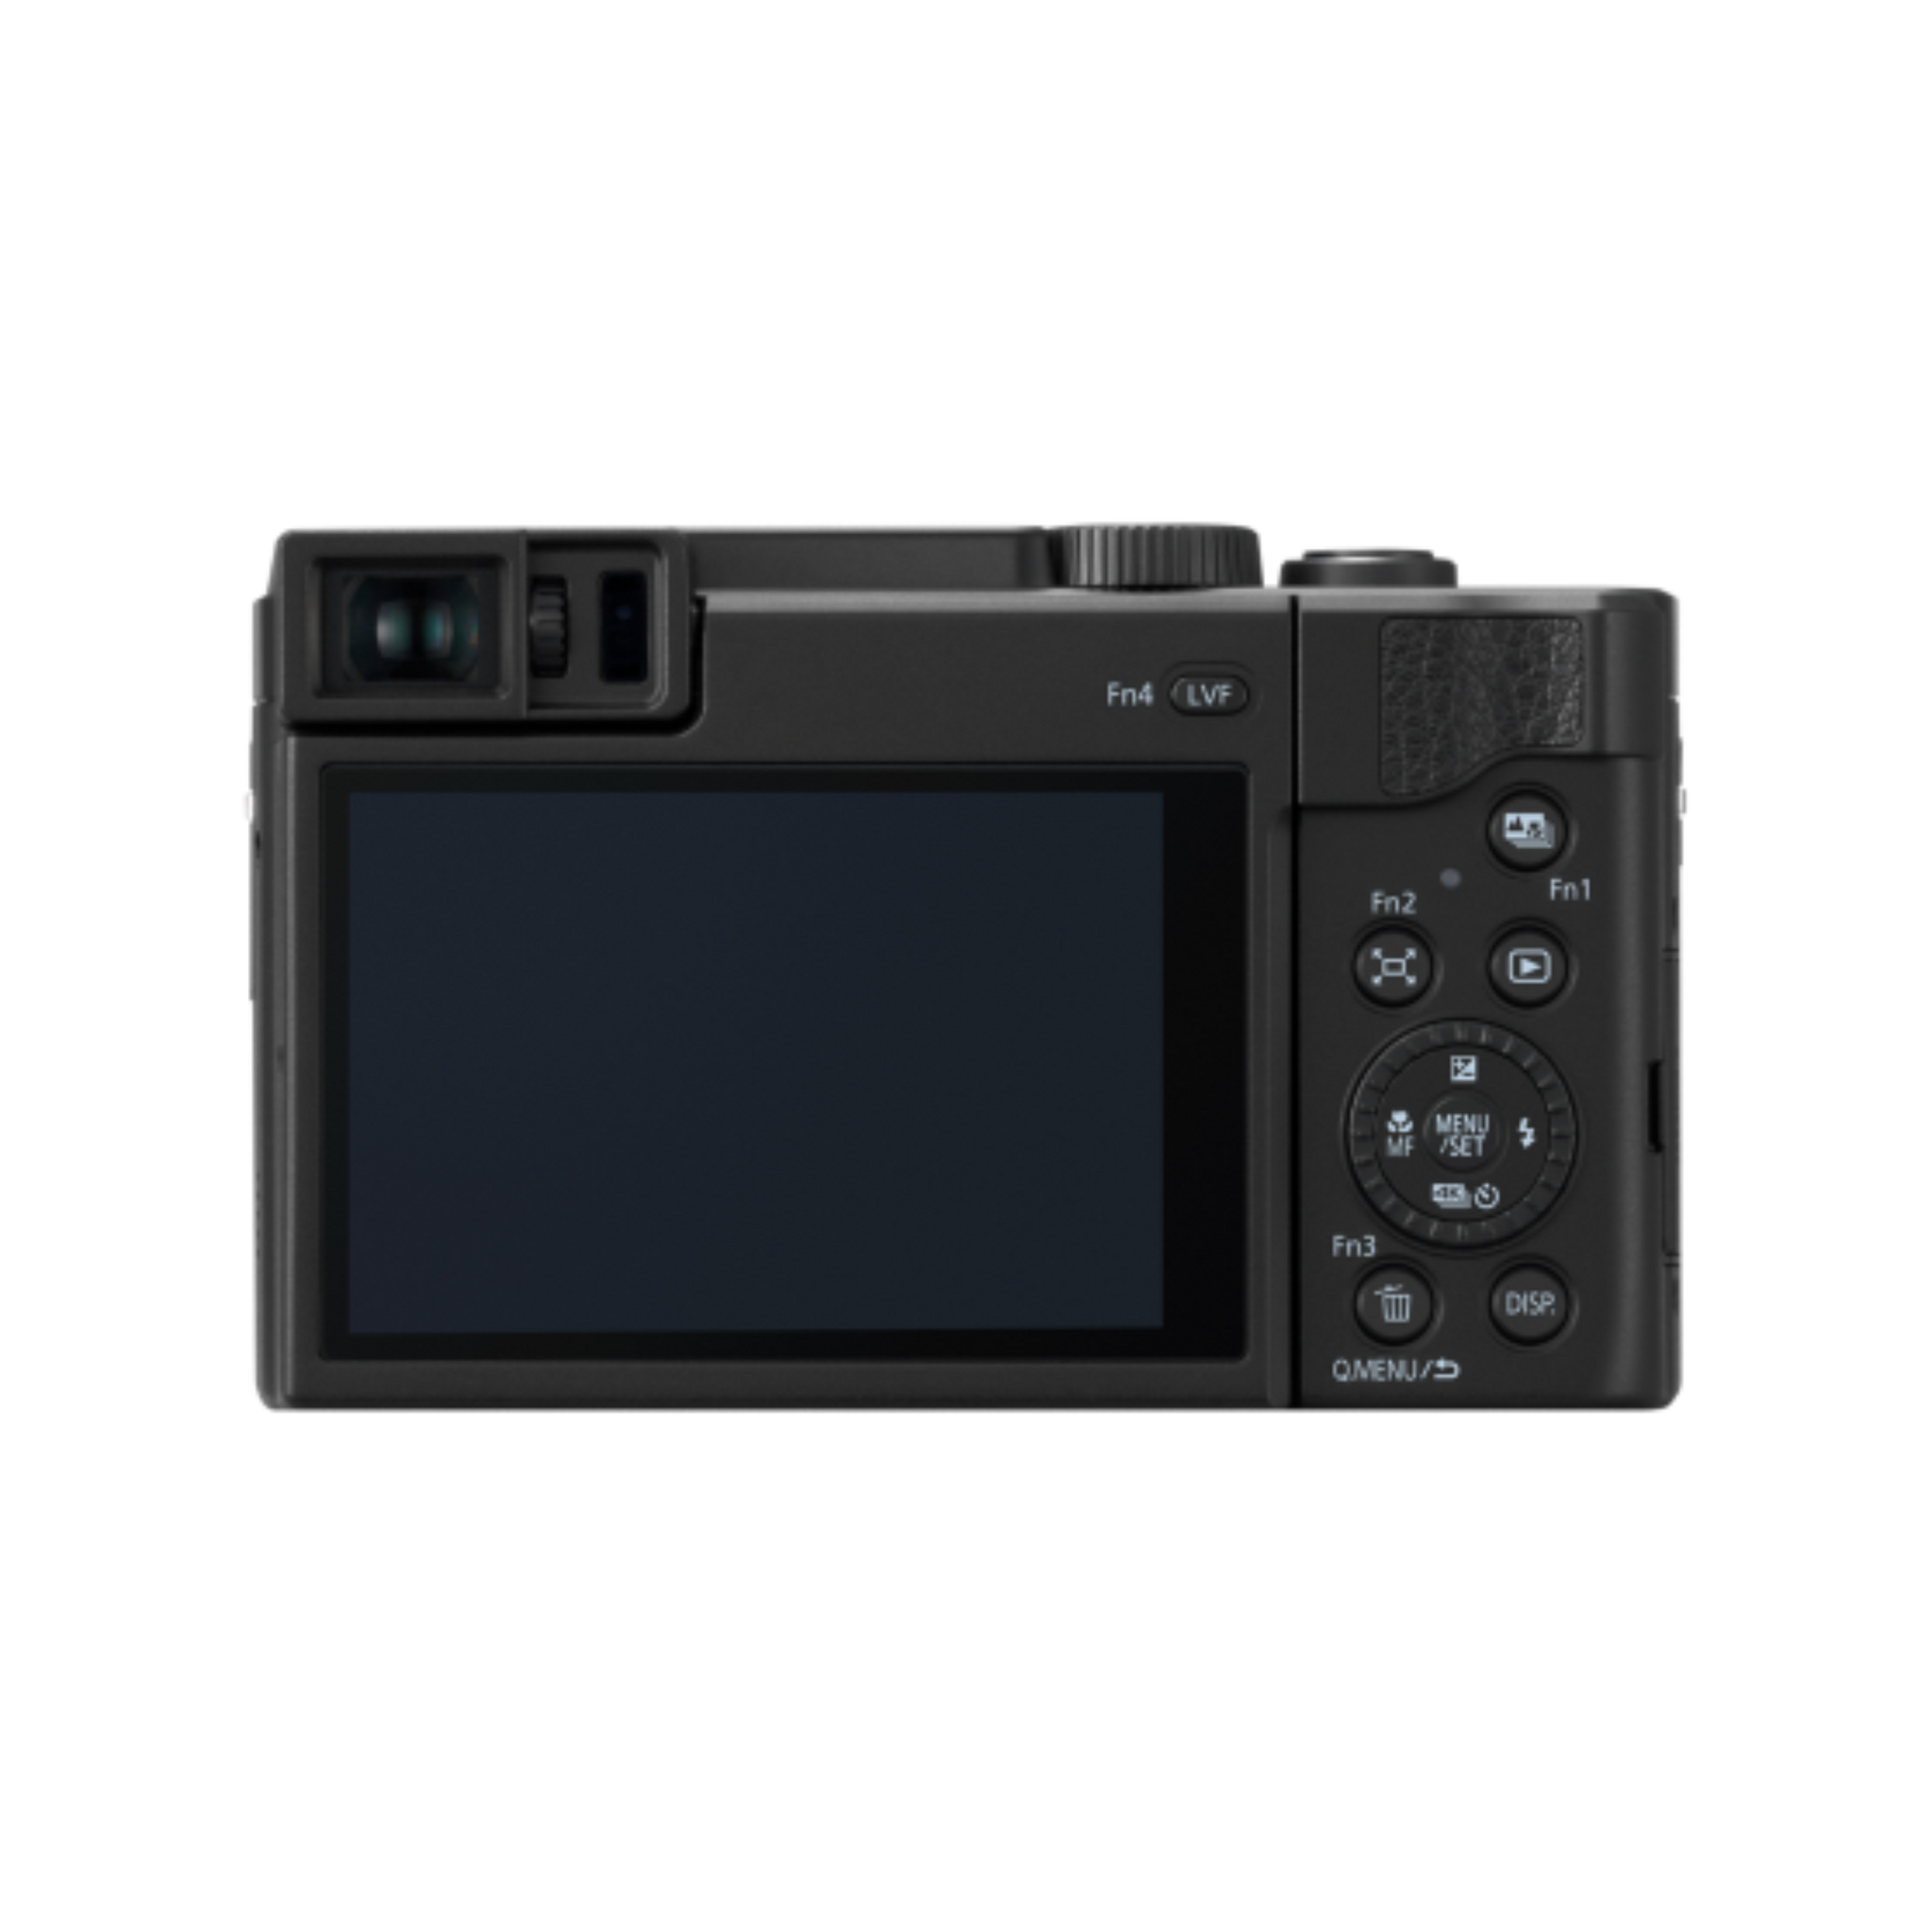 Panasonic LUMIX DC-TZ95 Digital Camera – Tick Tech Go